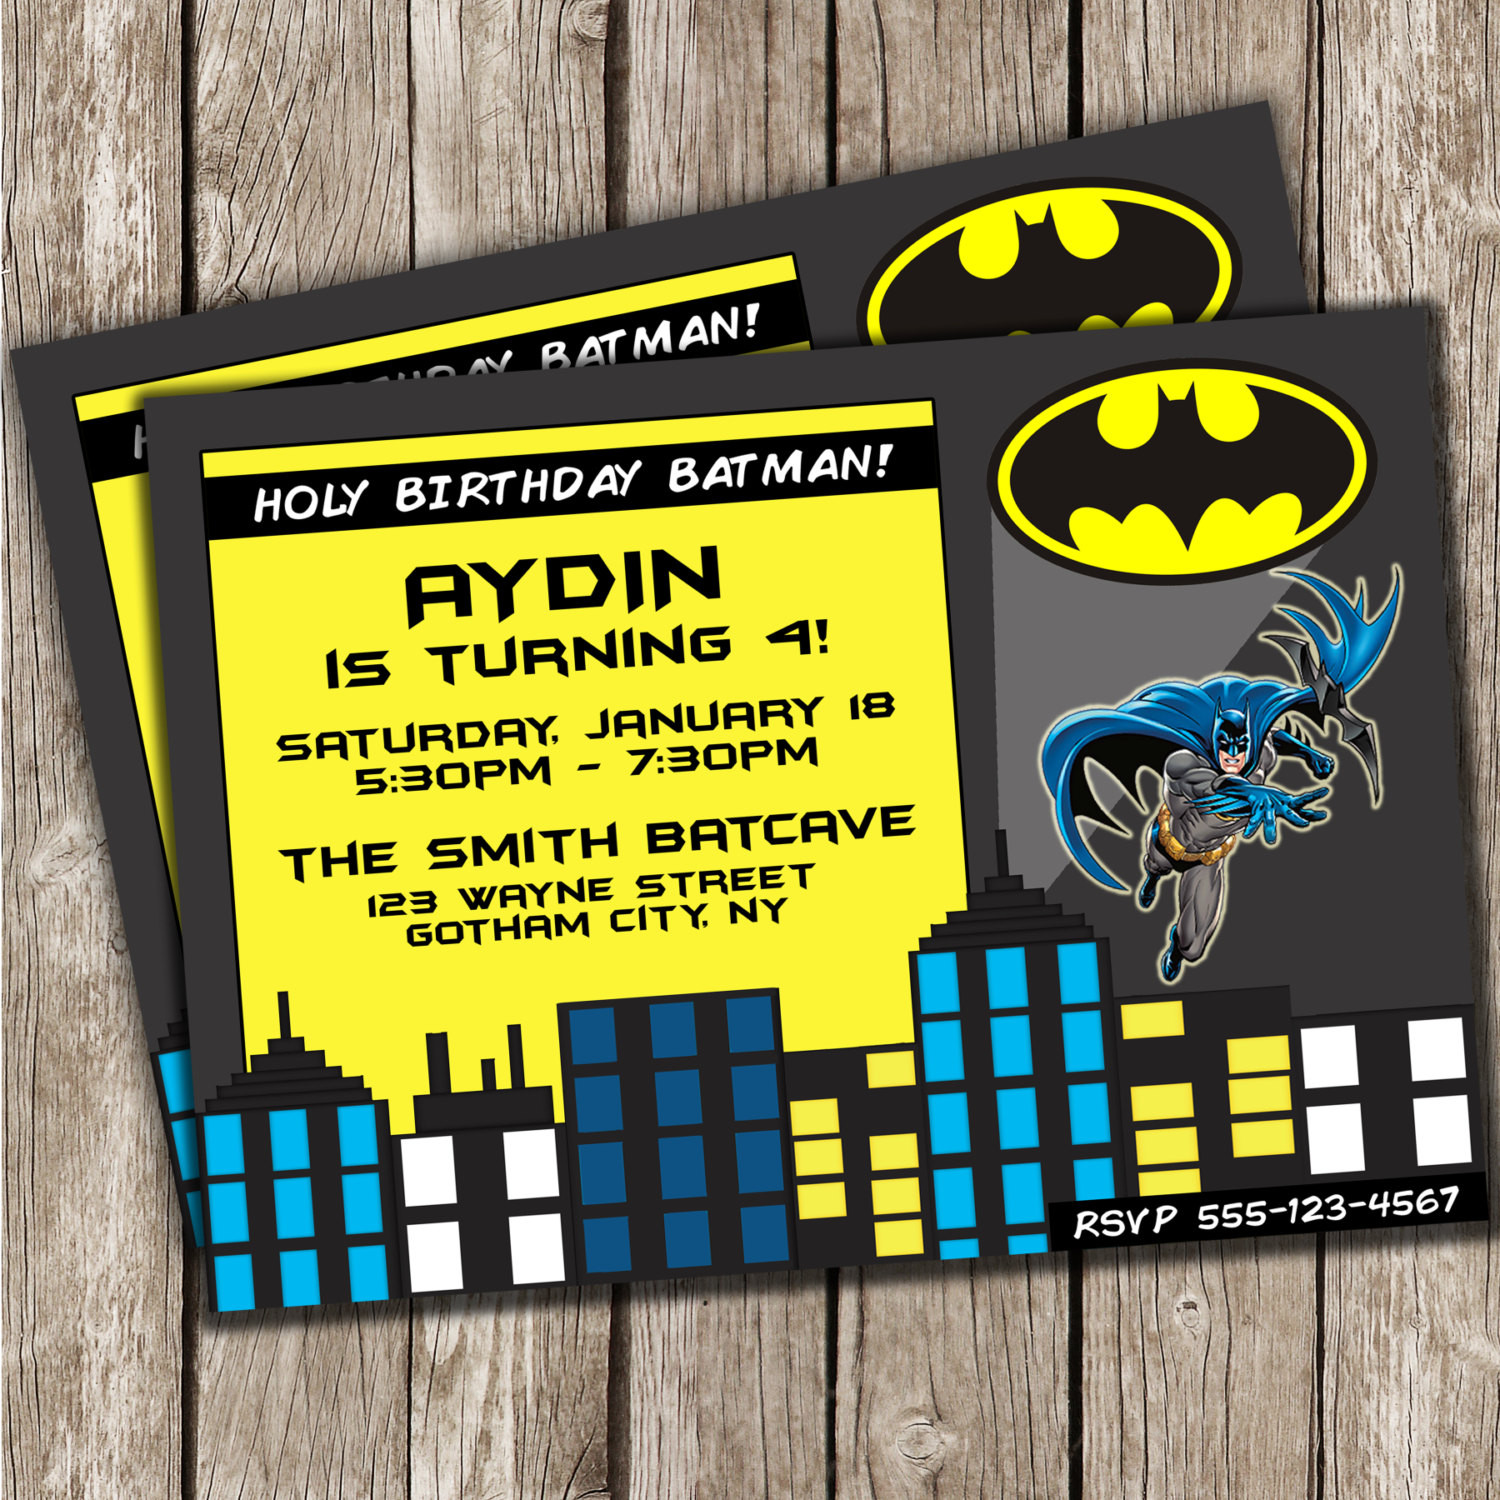 Best ideas about Batman Birthday Invitations
. Save or Pin Retro Batman Birthday Invitation Batman SuperHero Birthday Now.